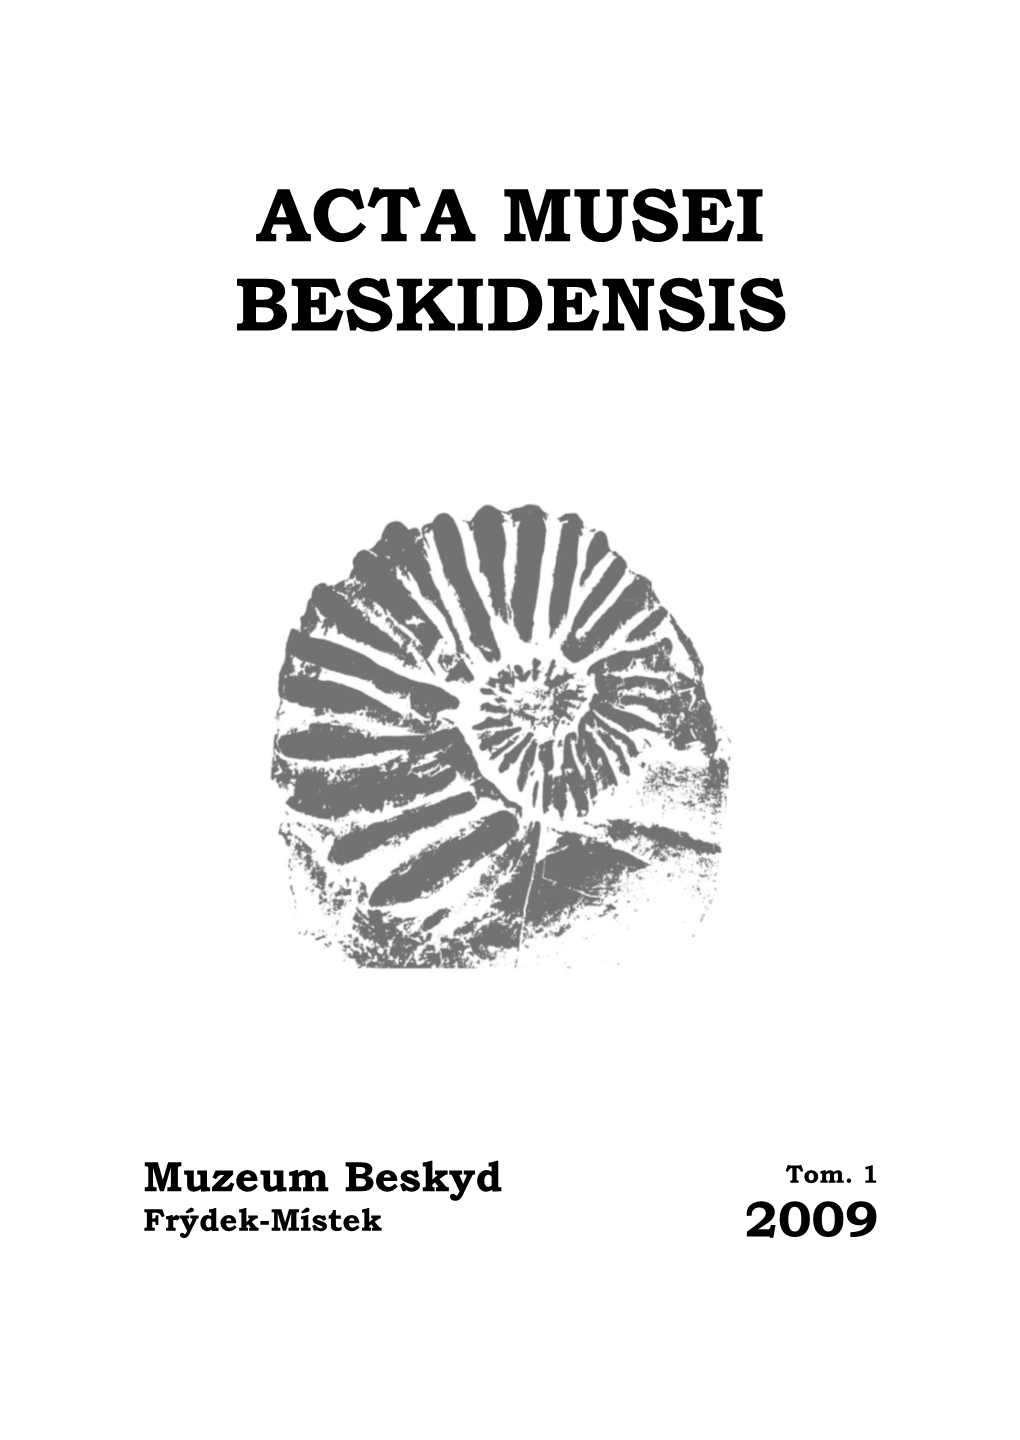 Acta Musei Beskidensis